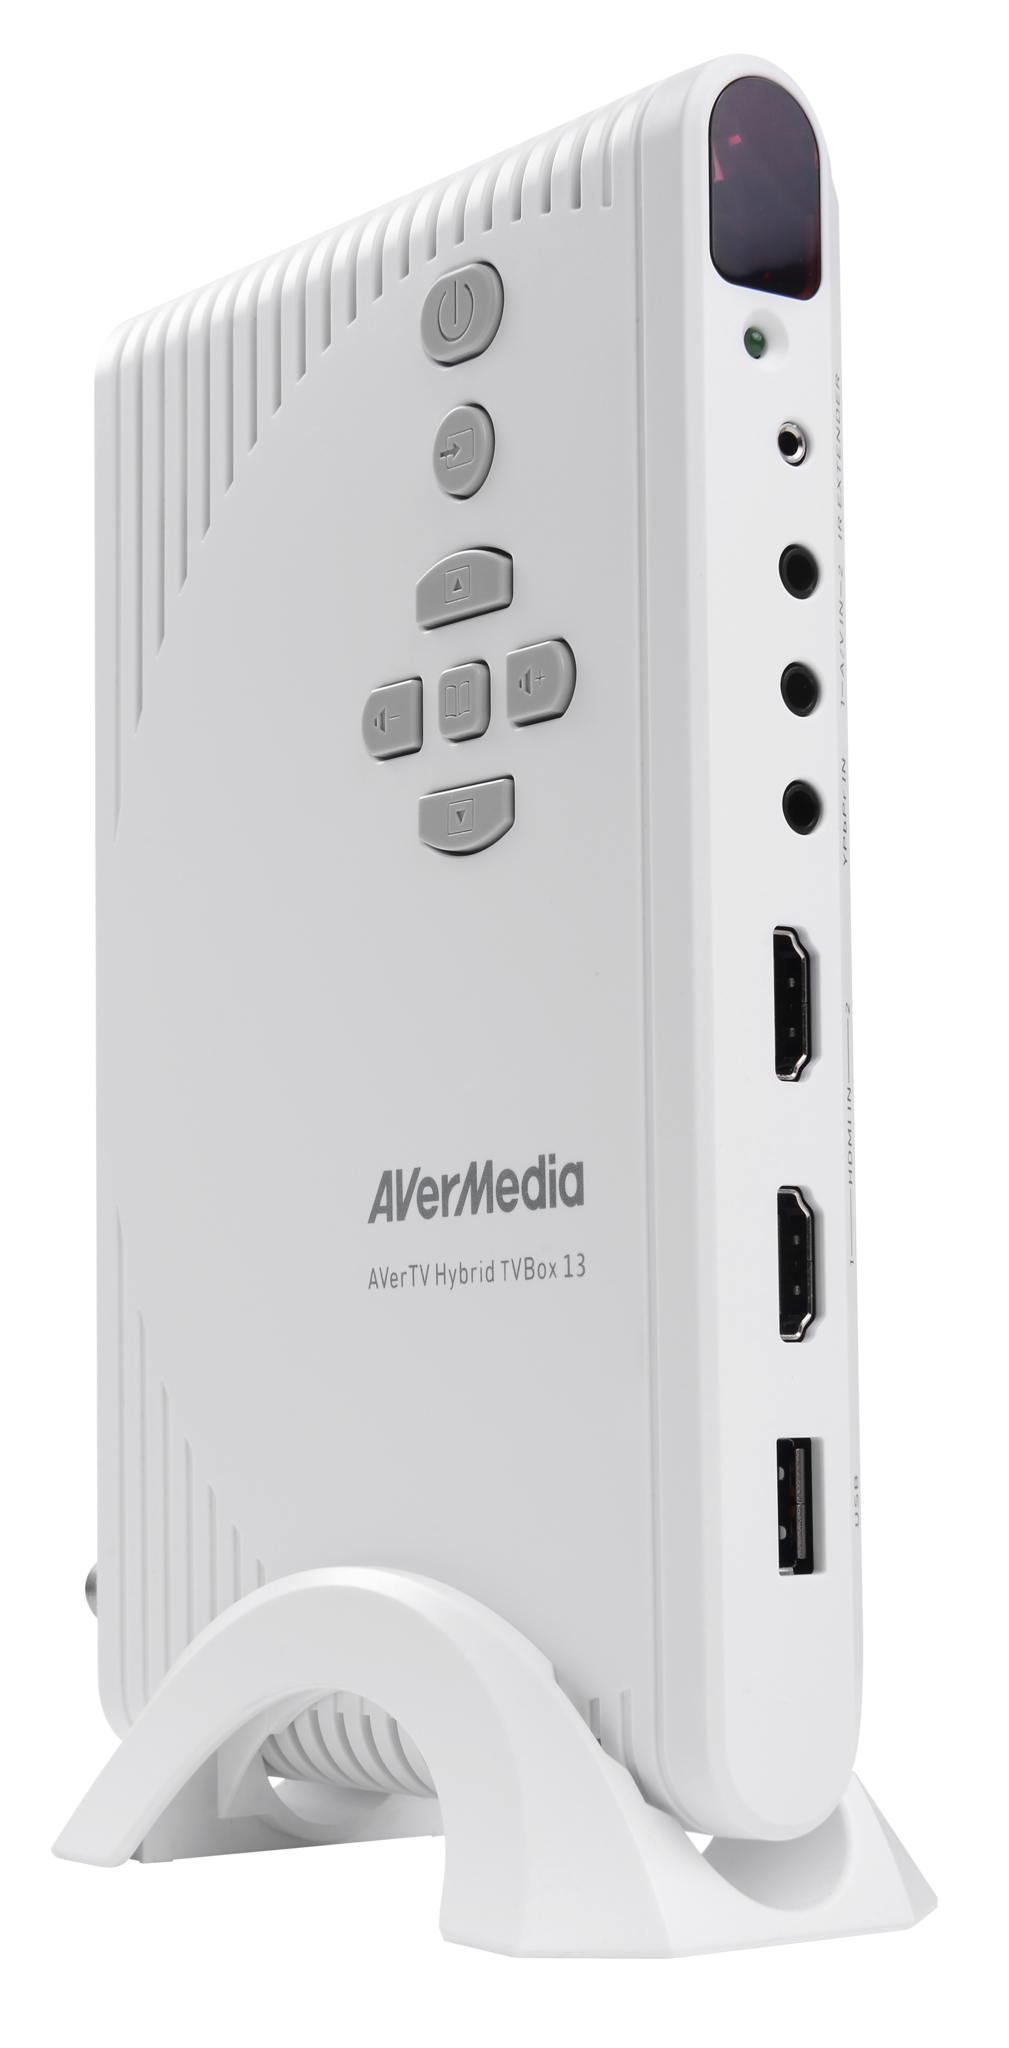 AVerMedia AVerTV Hybrid TVBox 13 (A200P) vertical mount